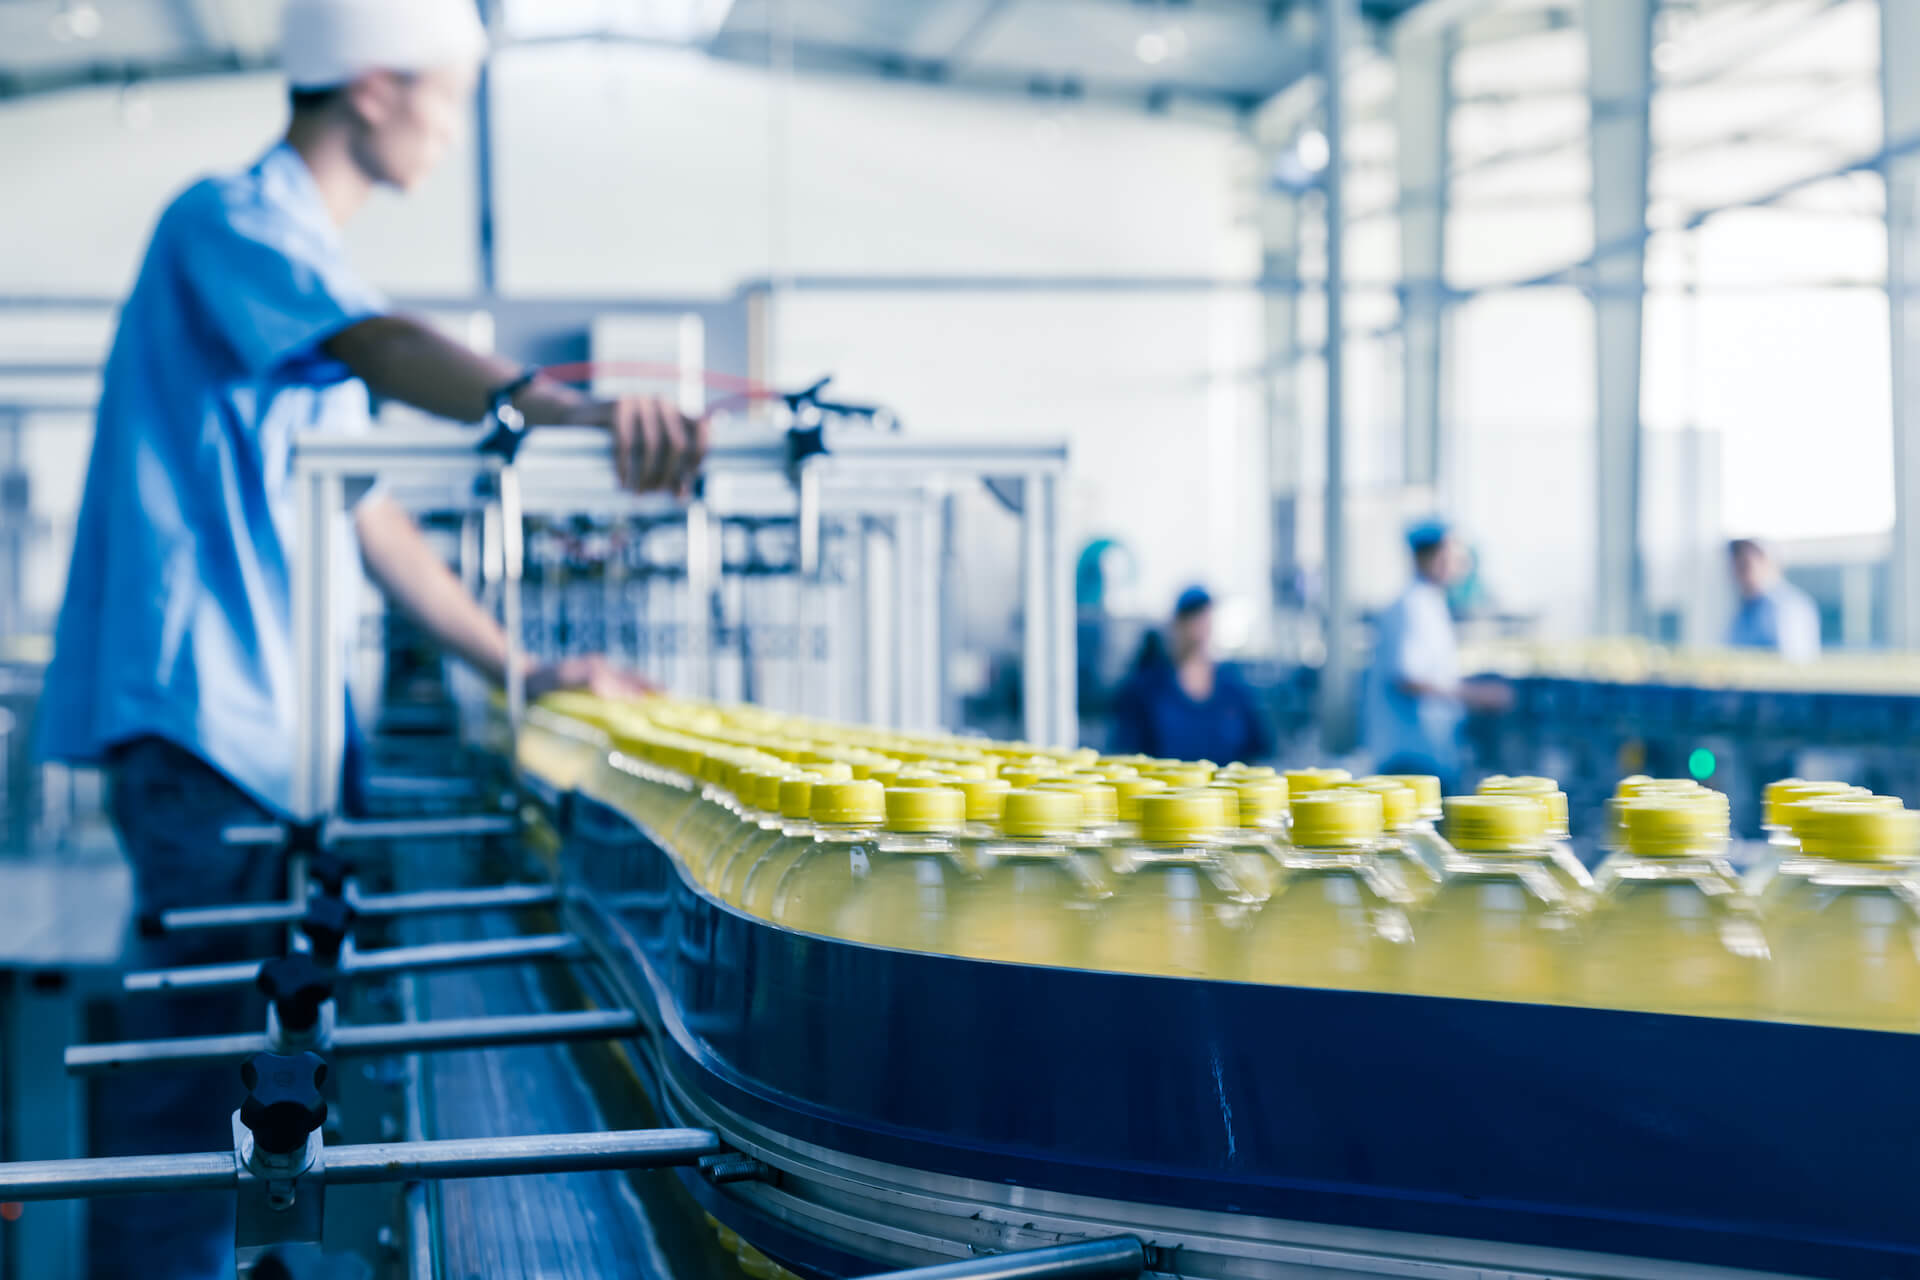 Yellow-capped bottles on conveyor belt.